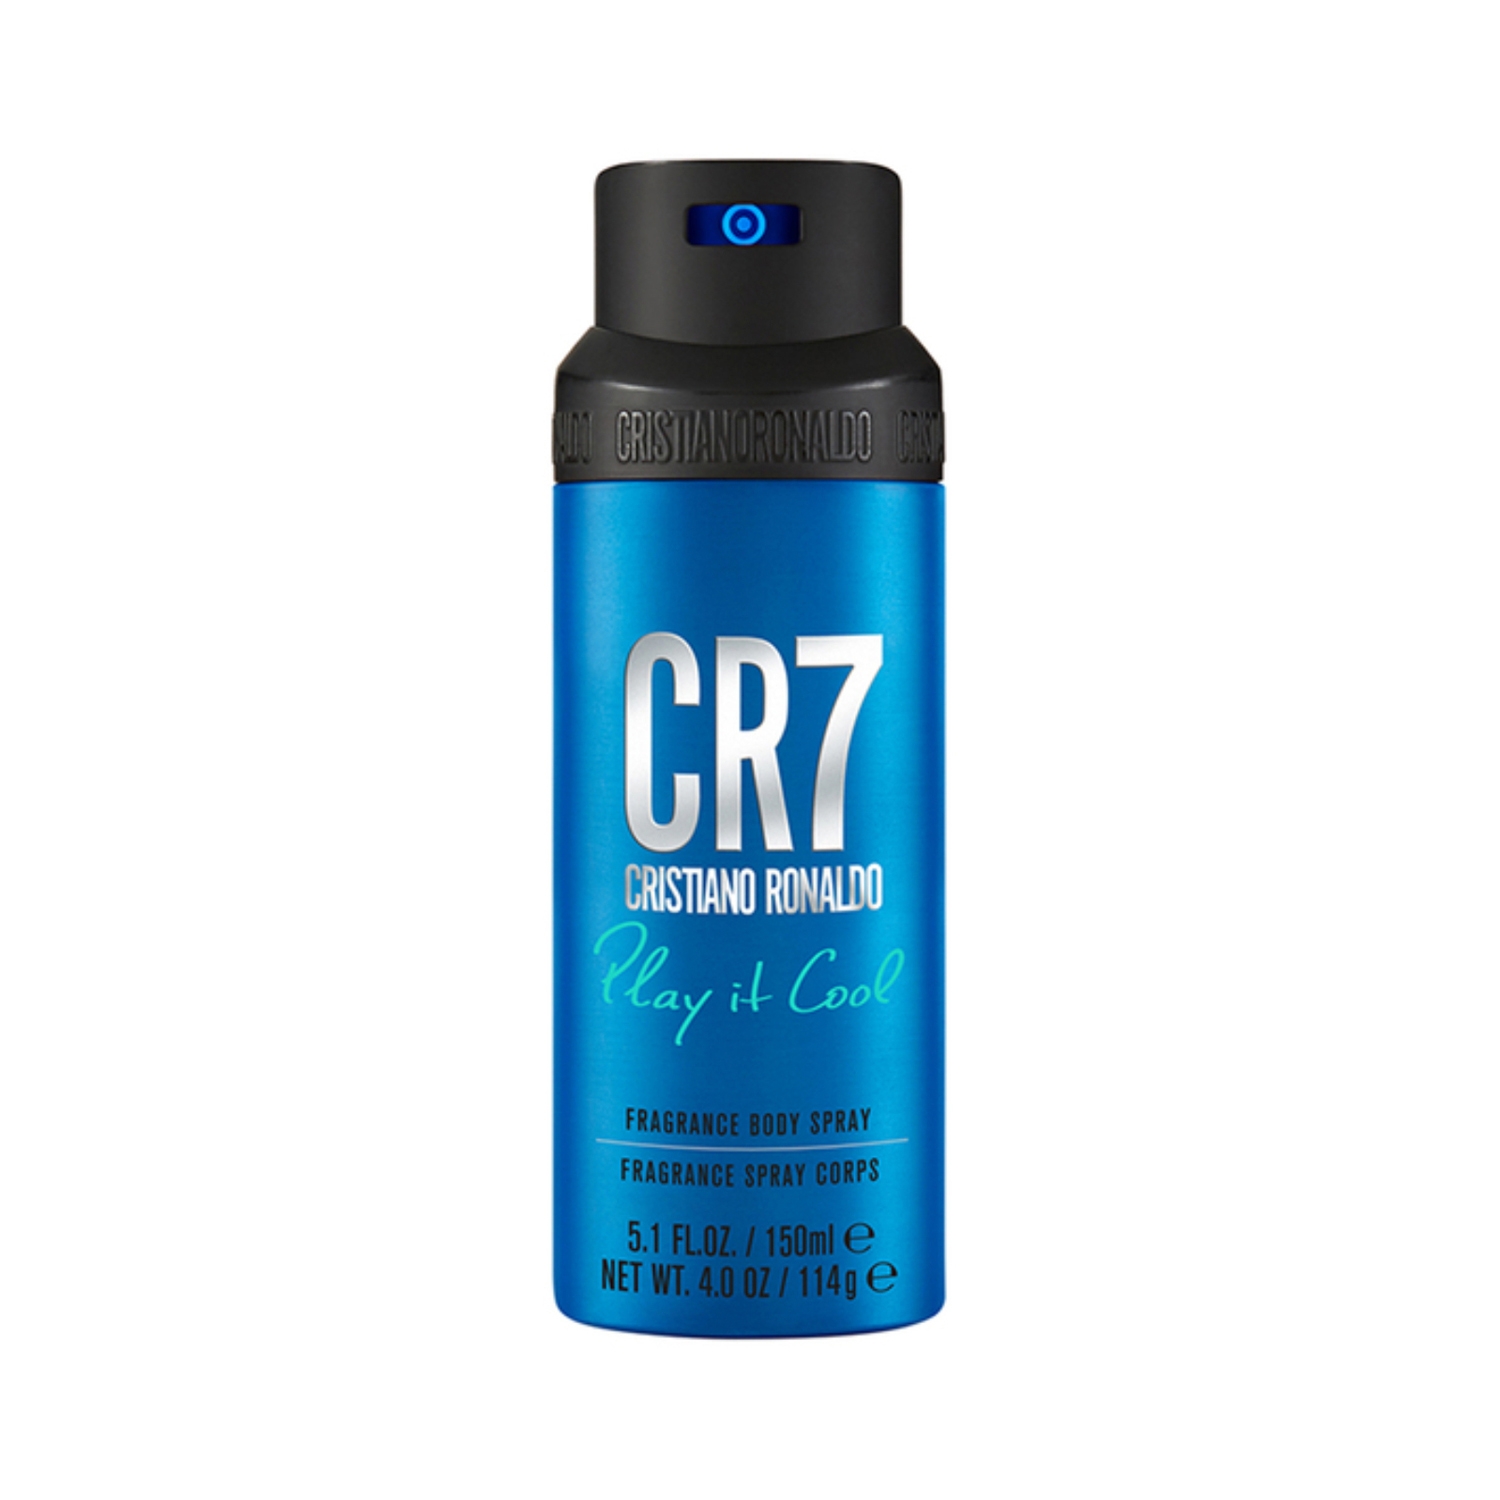 Cristiano Ronaldo | Cristiano Ronaldo CR7 Play It Cool Fragrance Body Spray (150ml)